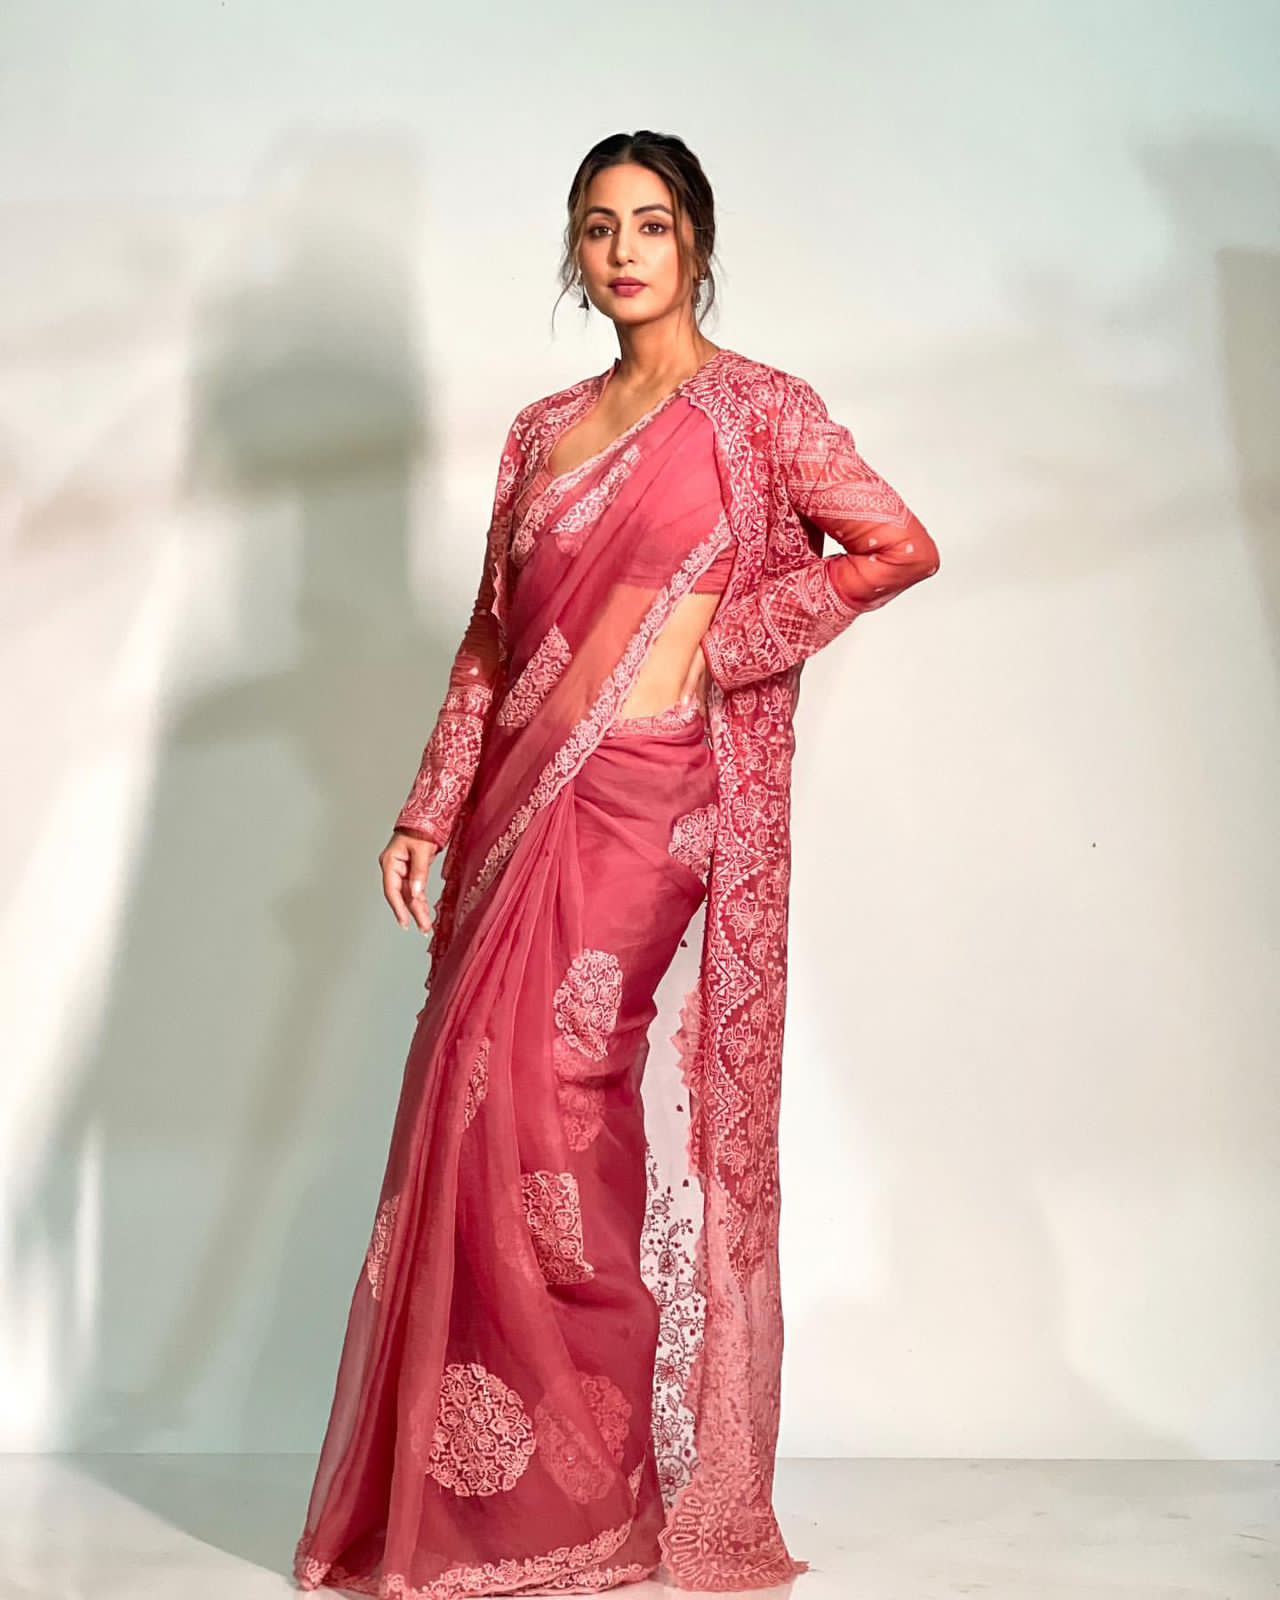 PHOTOS] Hacked actress Hina Khan's elegant saree looks will give you major  fashion inspiration